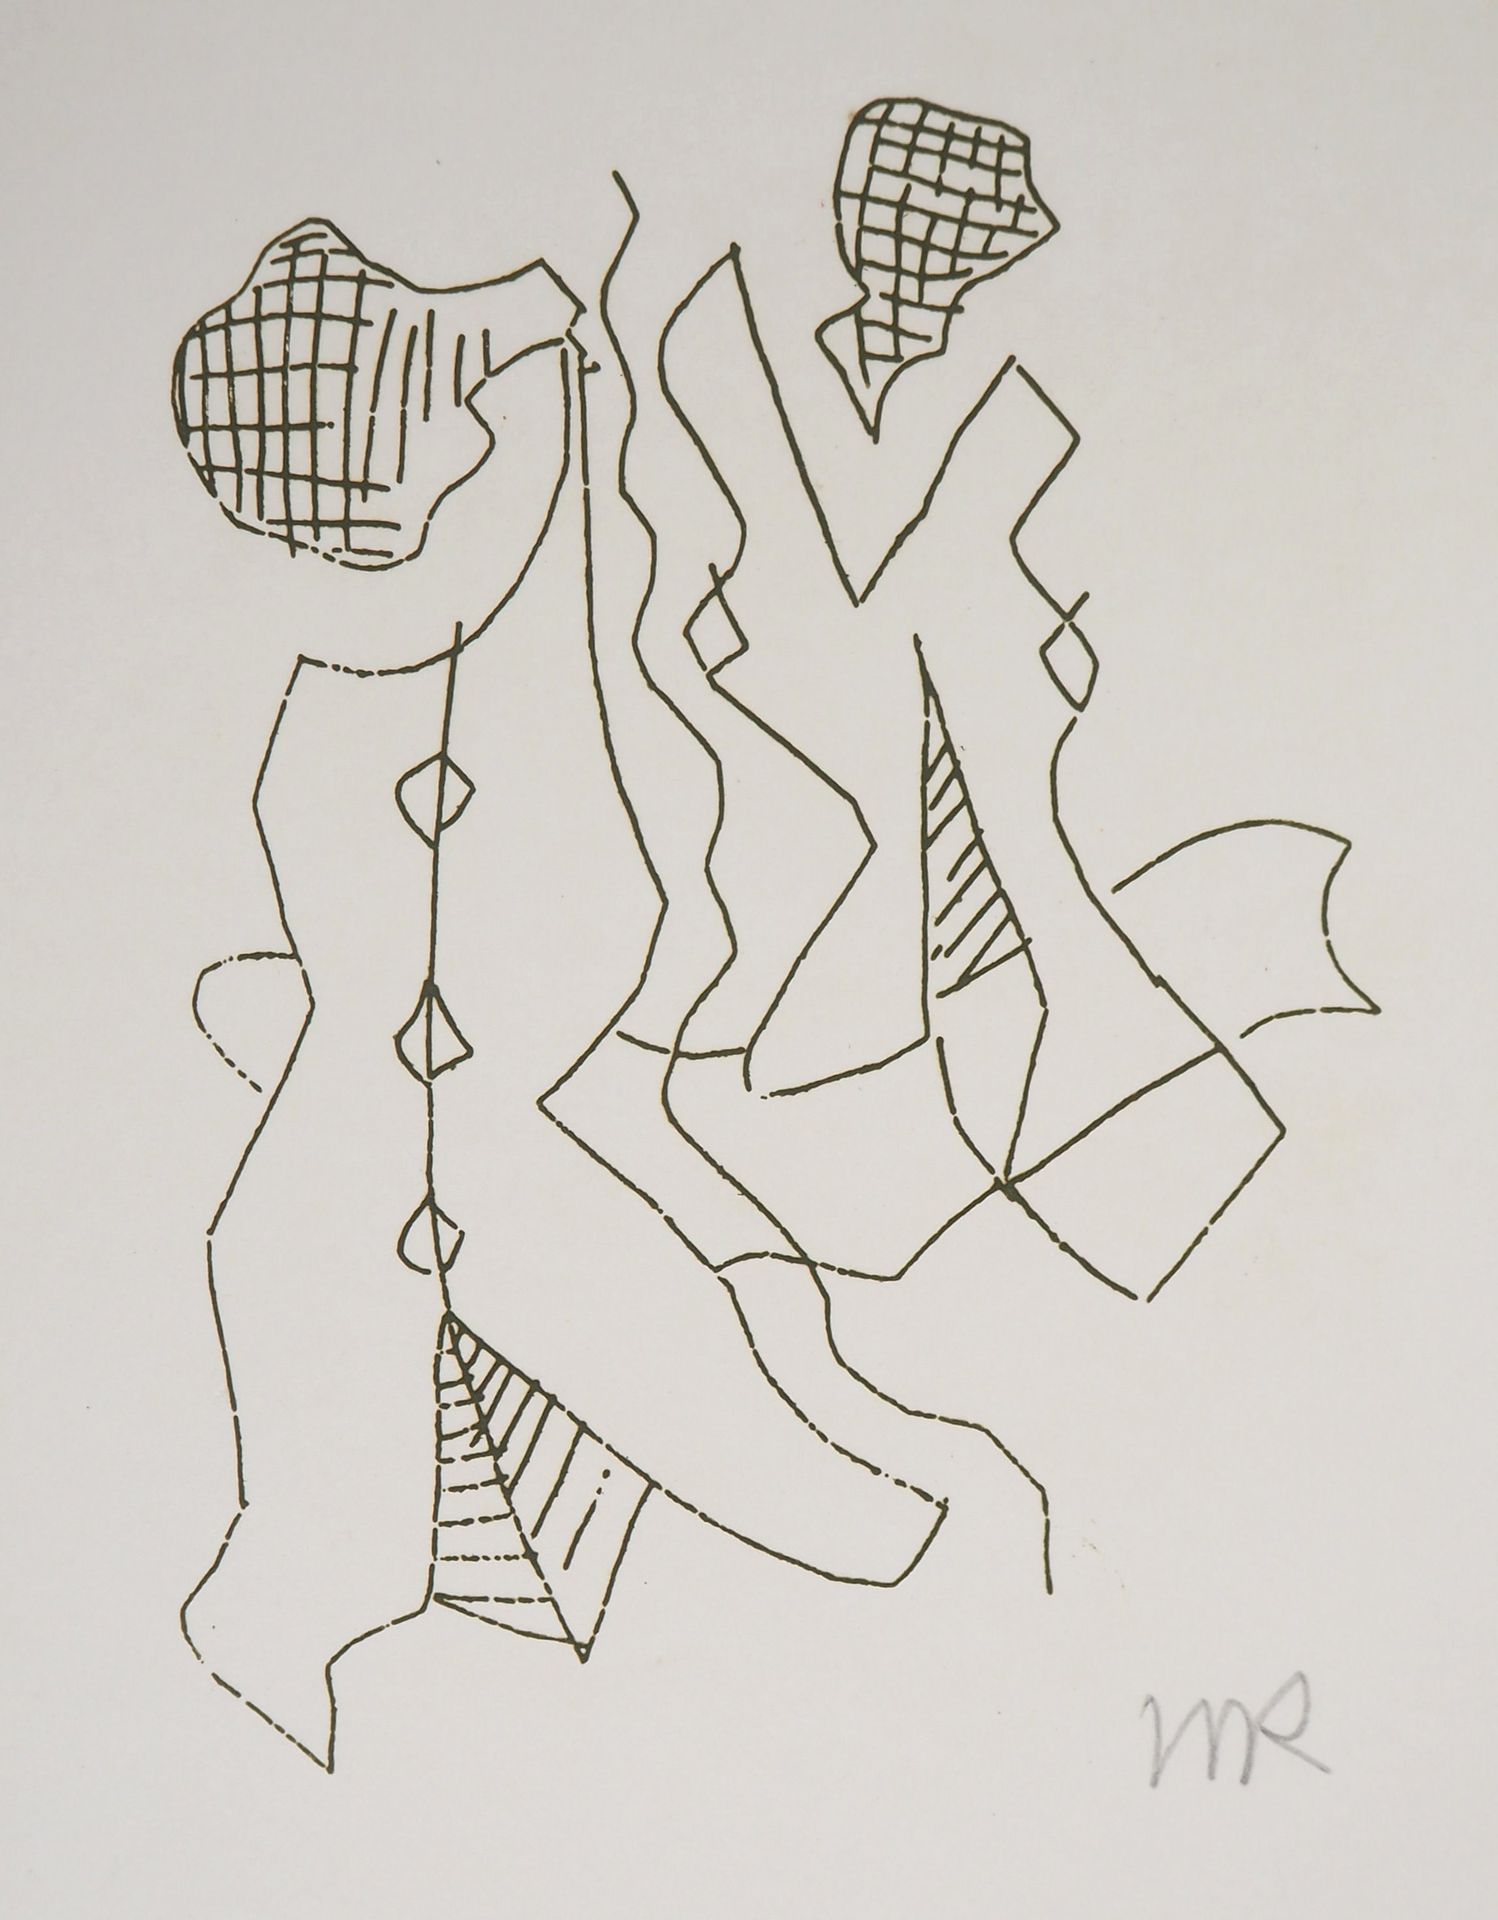 Man Ray 曼-雷(Emmanuel Radnitsky)

友谊，夏娃，1969

原始蚀刻画

铅笔签名的艺术家

牛皮纸上，23 x 17厘米

编号&hellip;